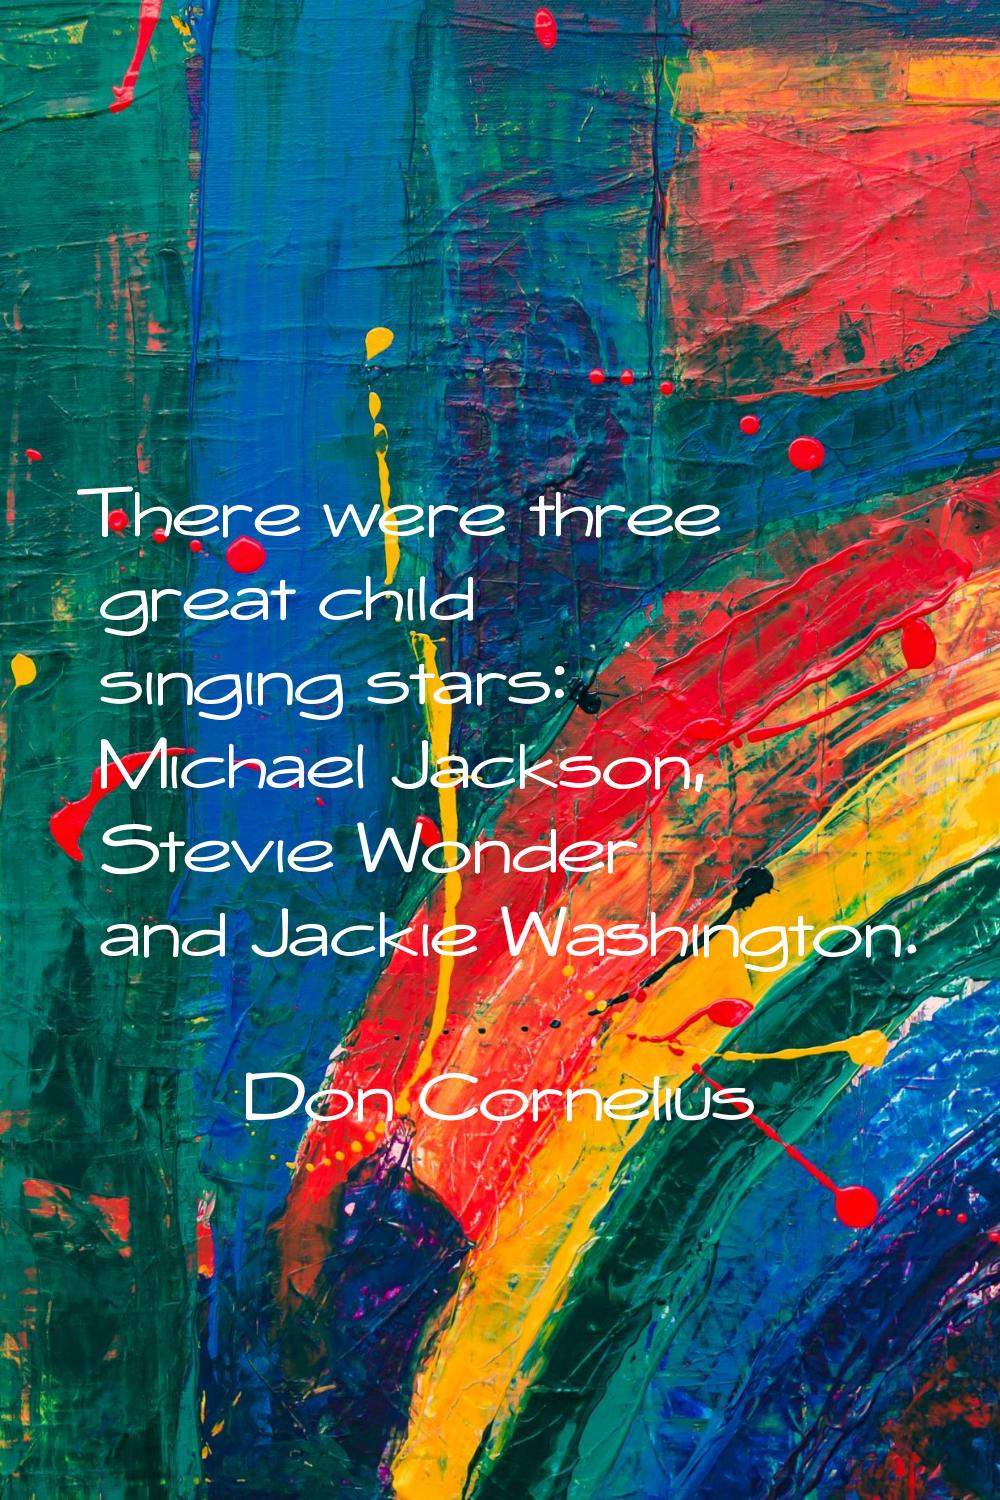 There were three great child singing stars: Michael Jackson, Stevie Wonder and Jackie Washington.